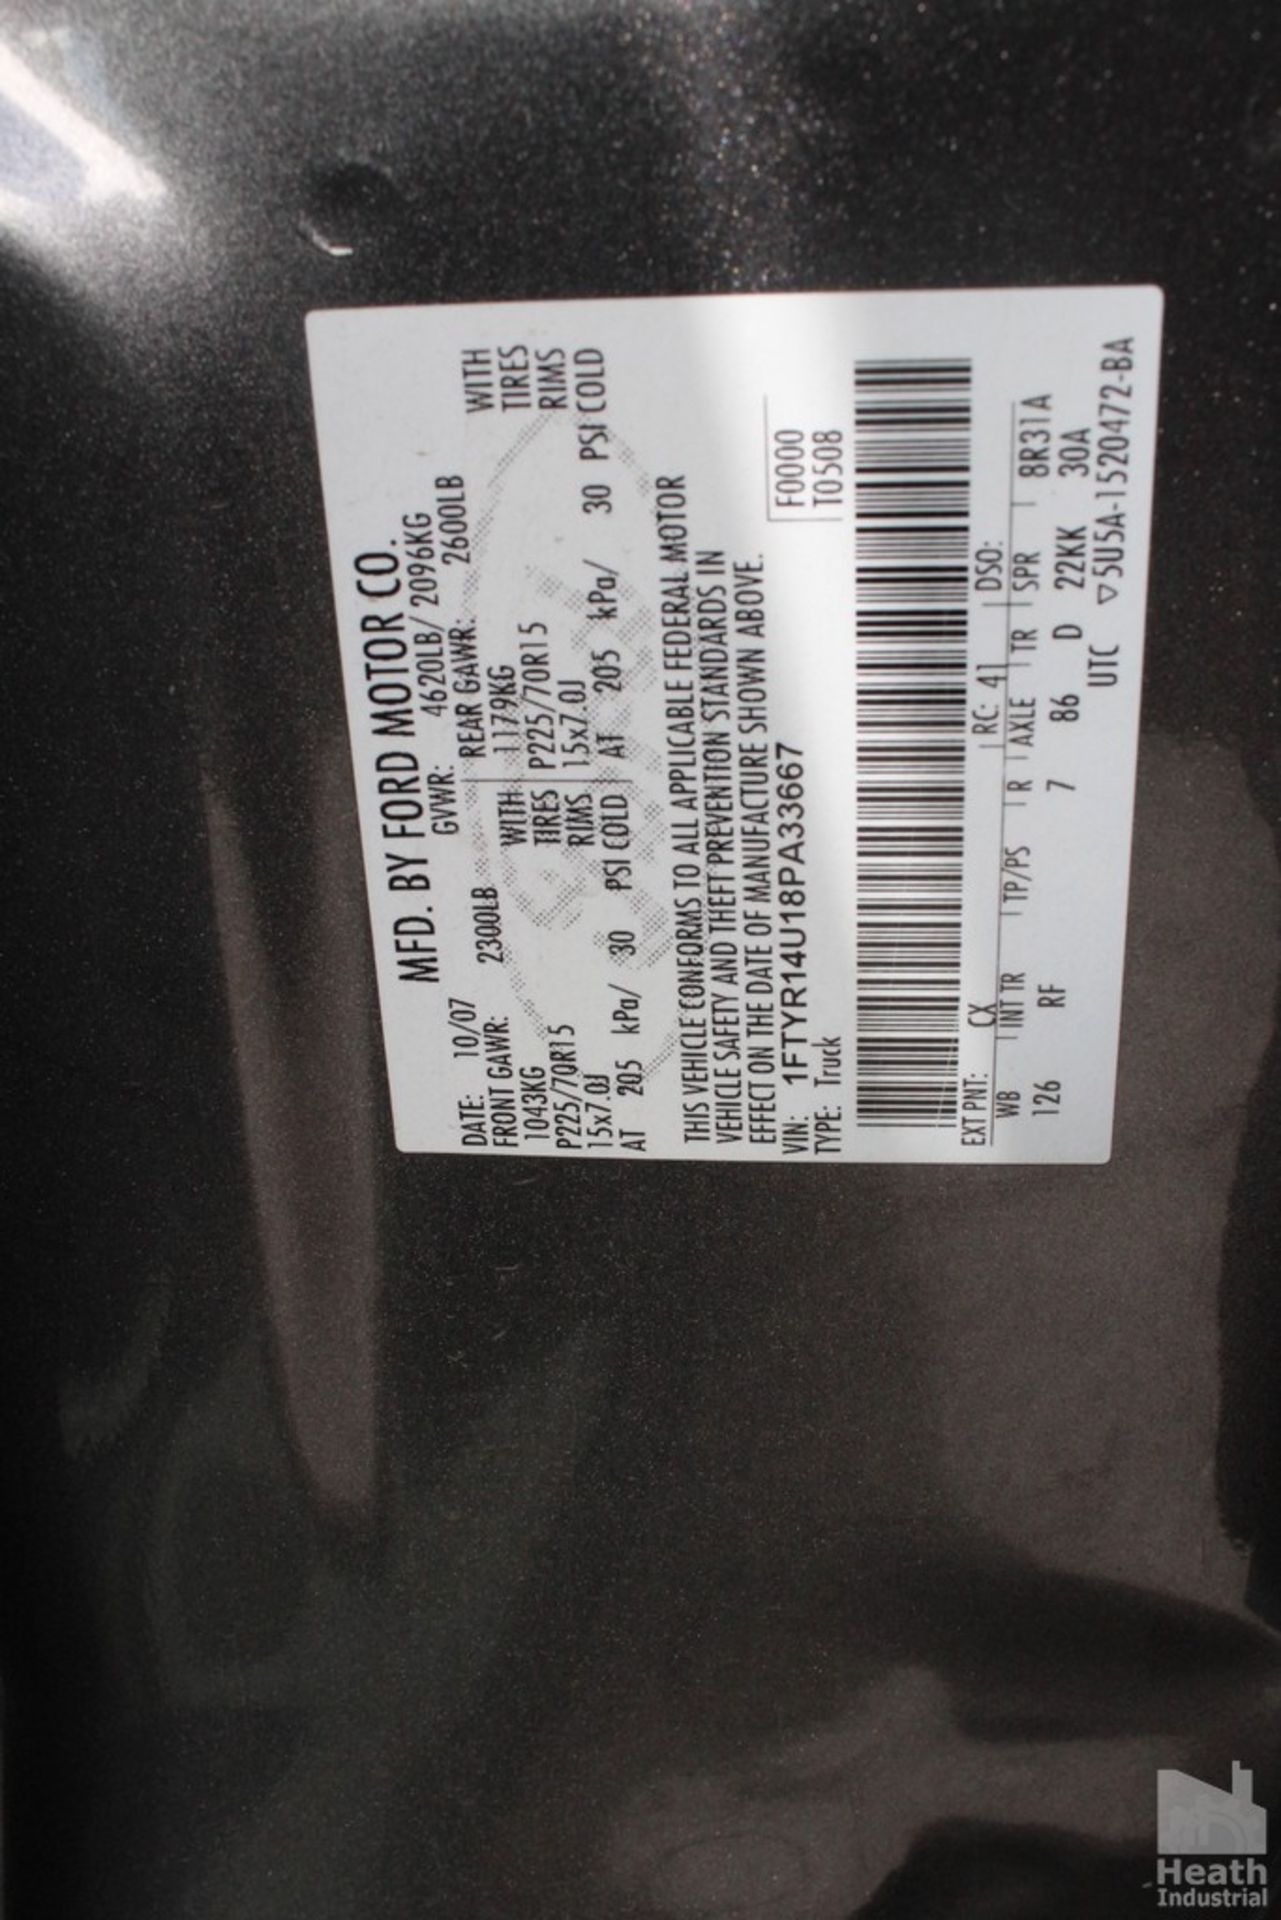 2008 FORD MODEL RANGER SUPER CAB PICK UP TRUCK, VIN: 1FTYR14U189A33667, AUTOMATIC TRANSMISSION, - Image 5 of 7